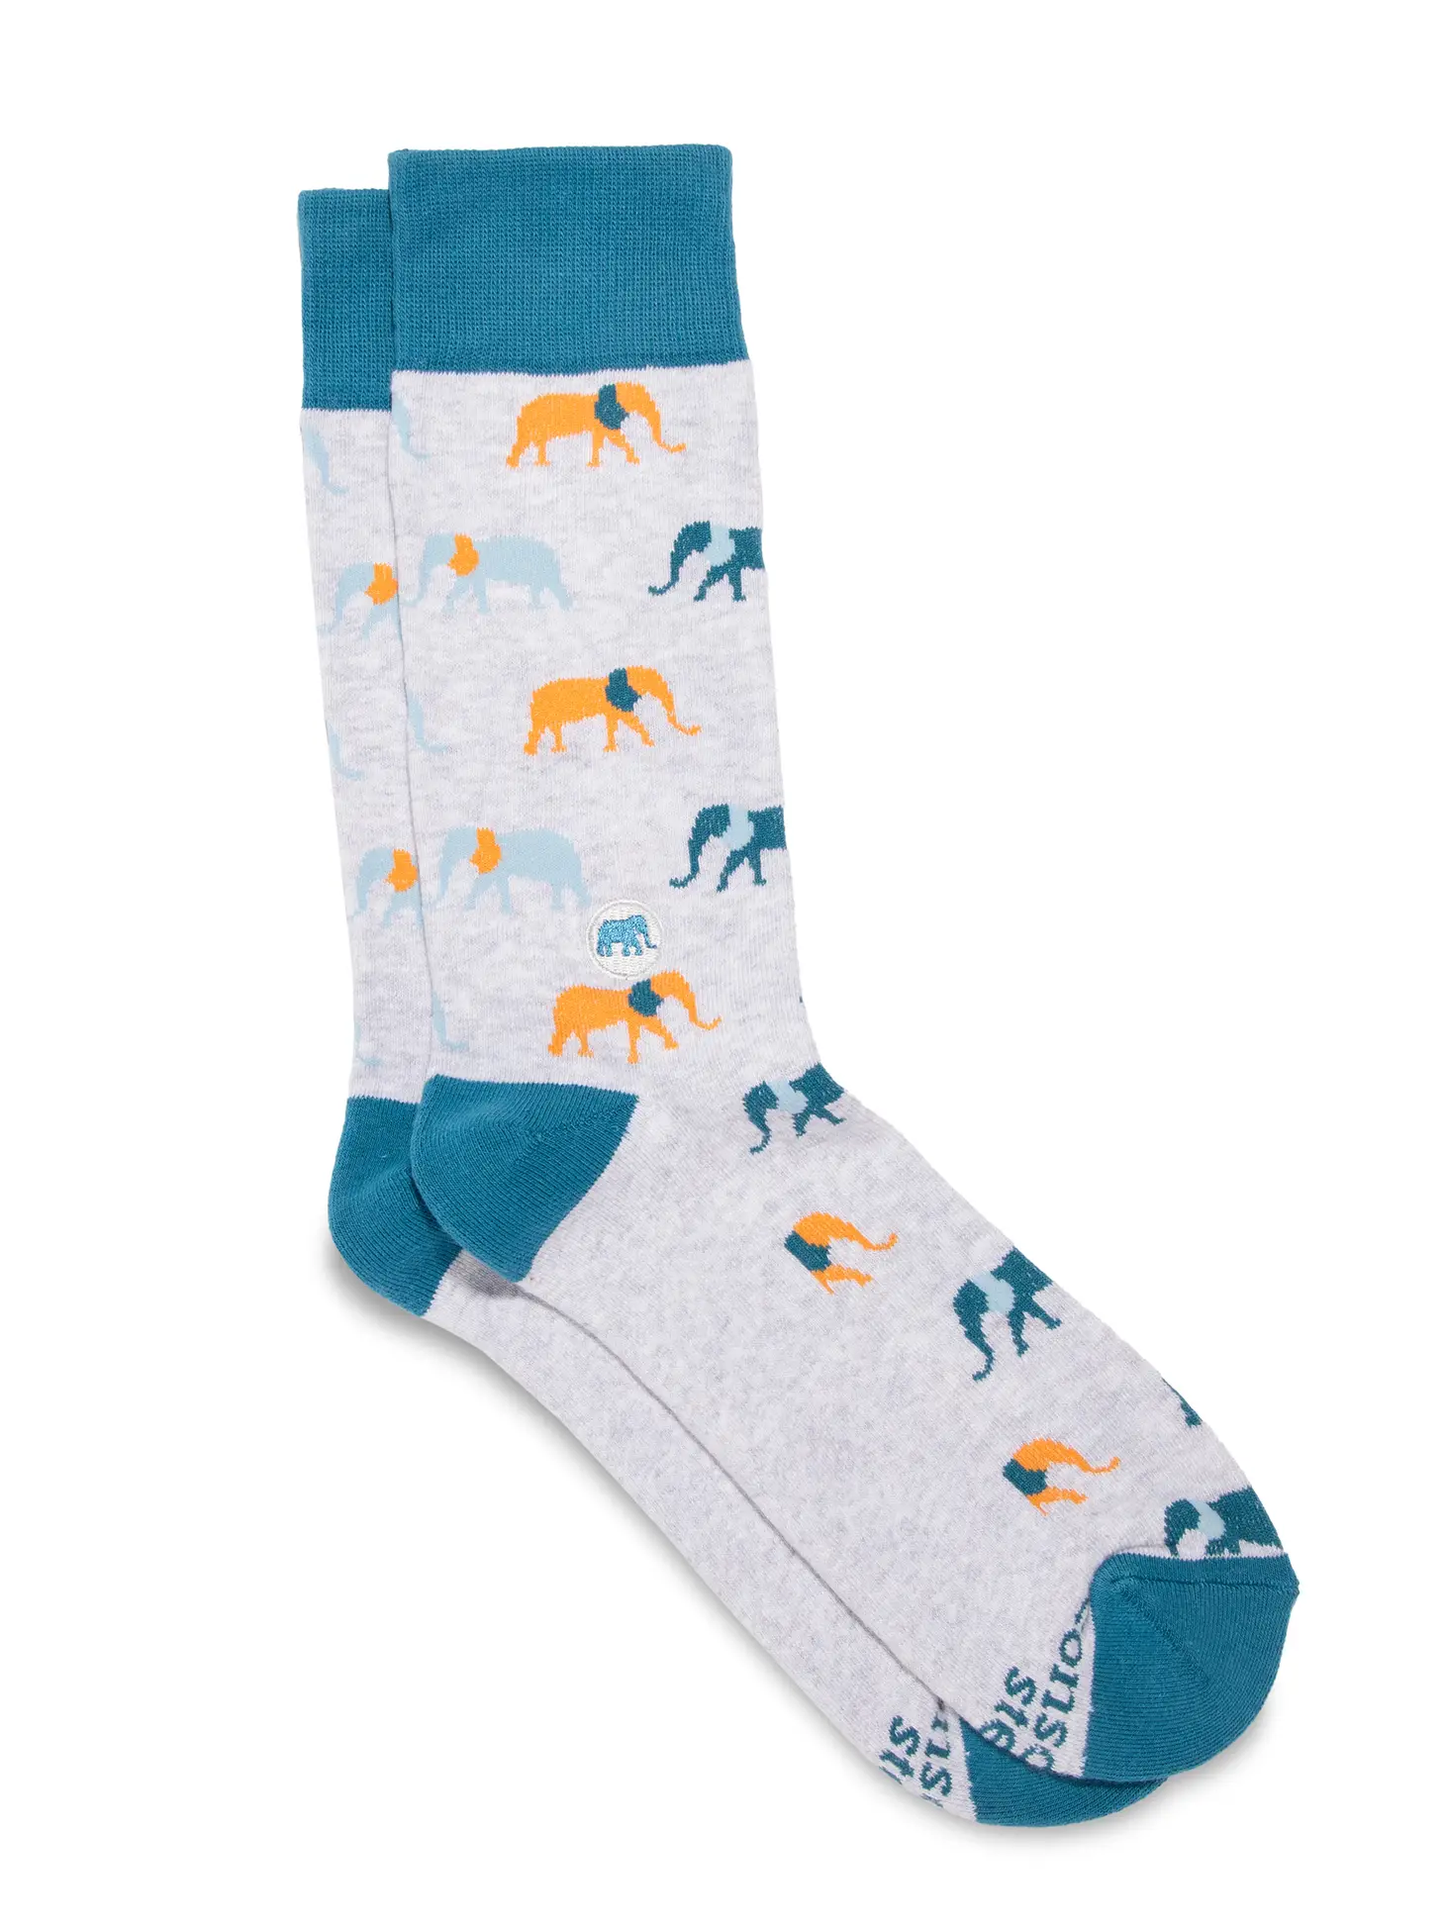 Socks That Protect Elephants